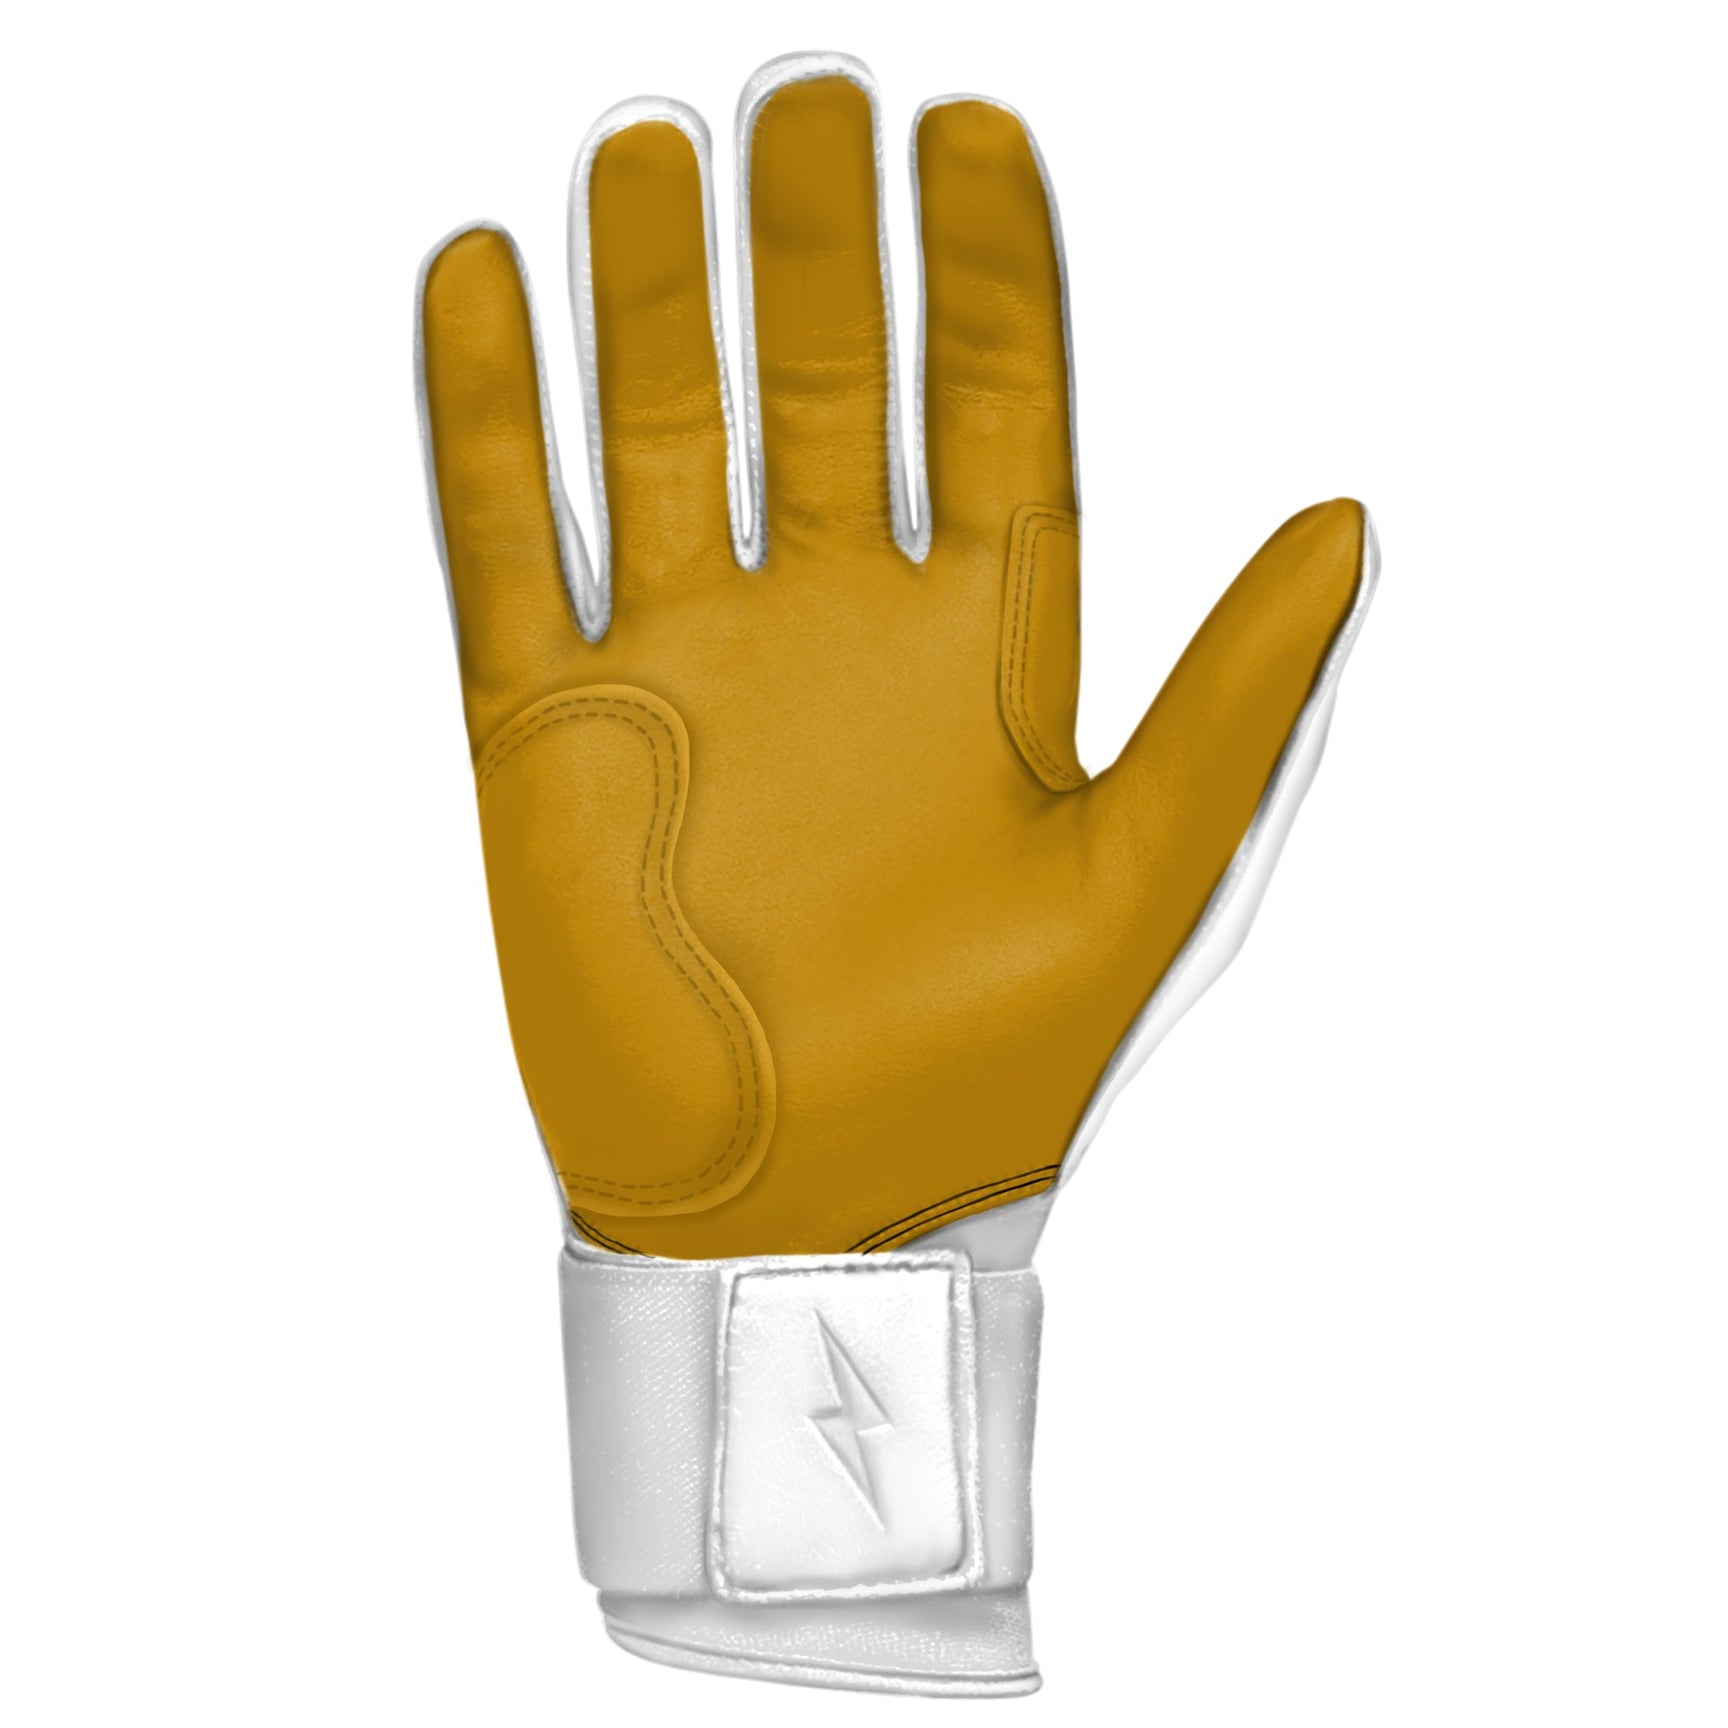 Bruce Bolt Premium Pro Long Cuff Batting Gloves White